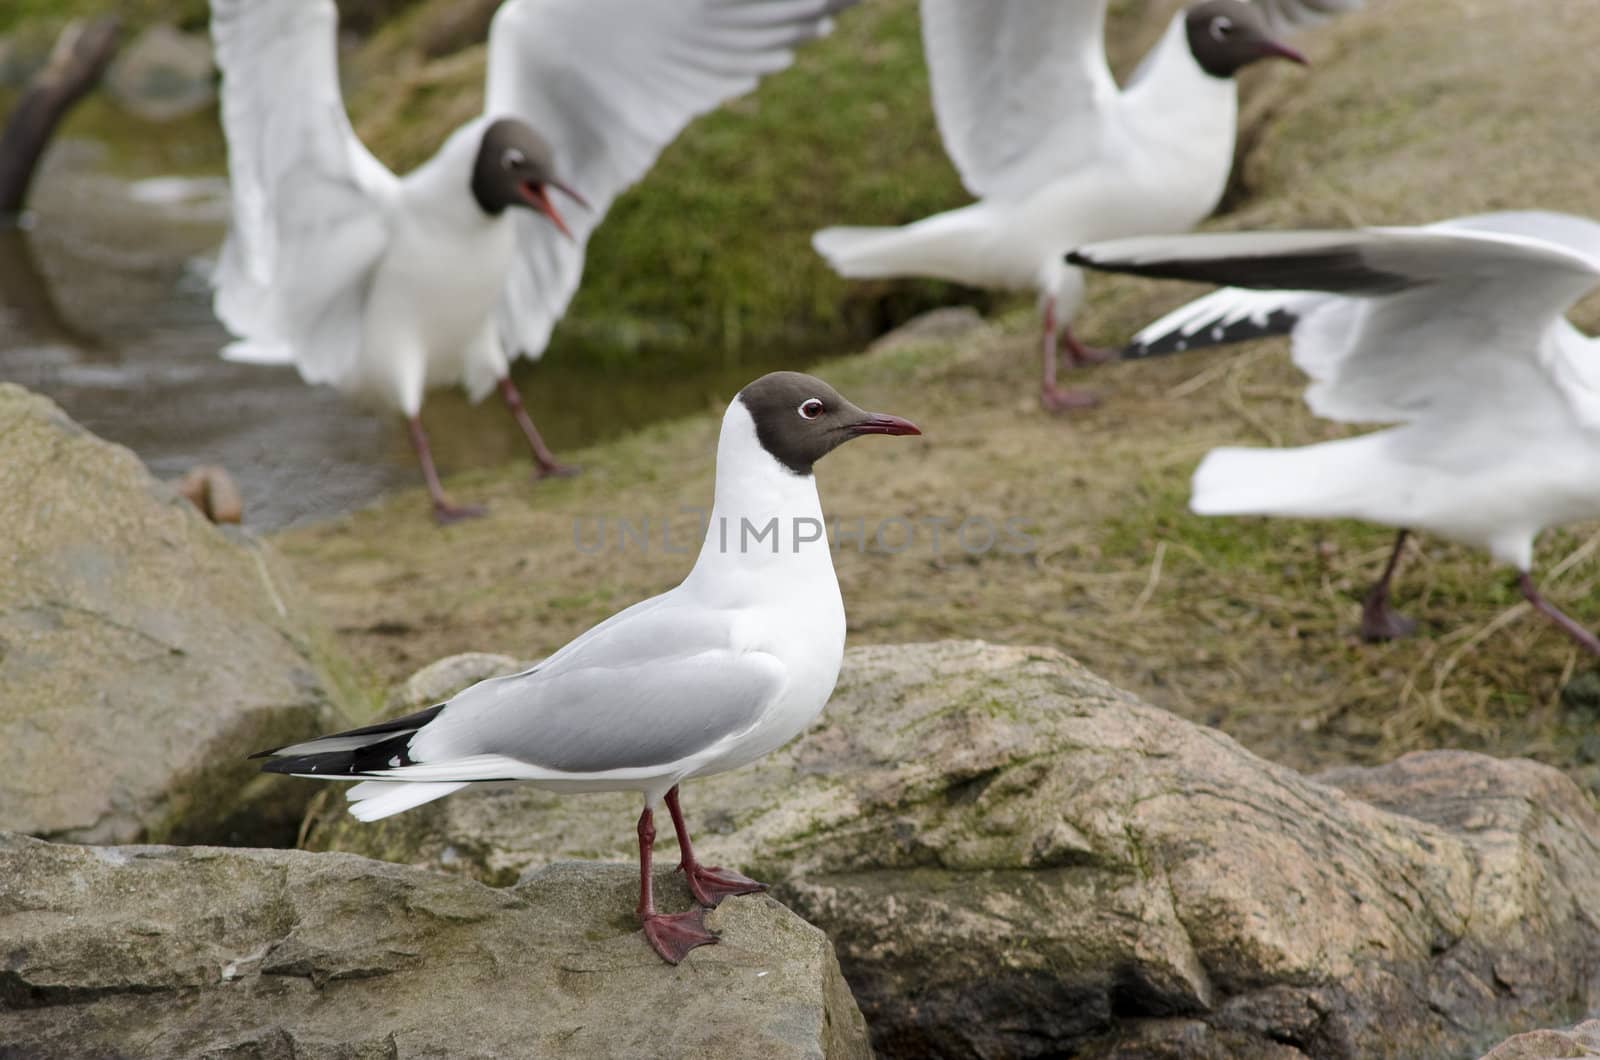 Black-headed gulls, Chroicocephalus ridibundus, sitting on stones and flying around